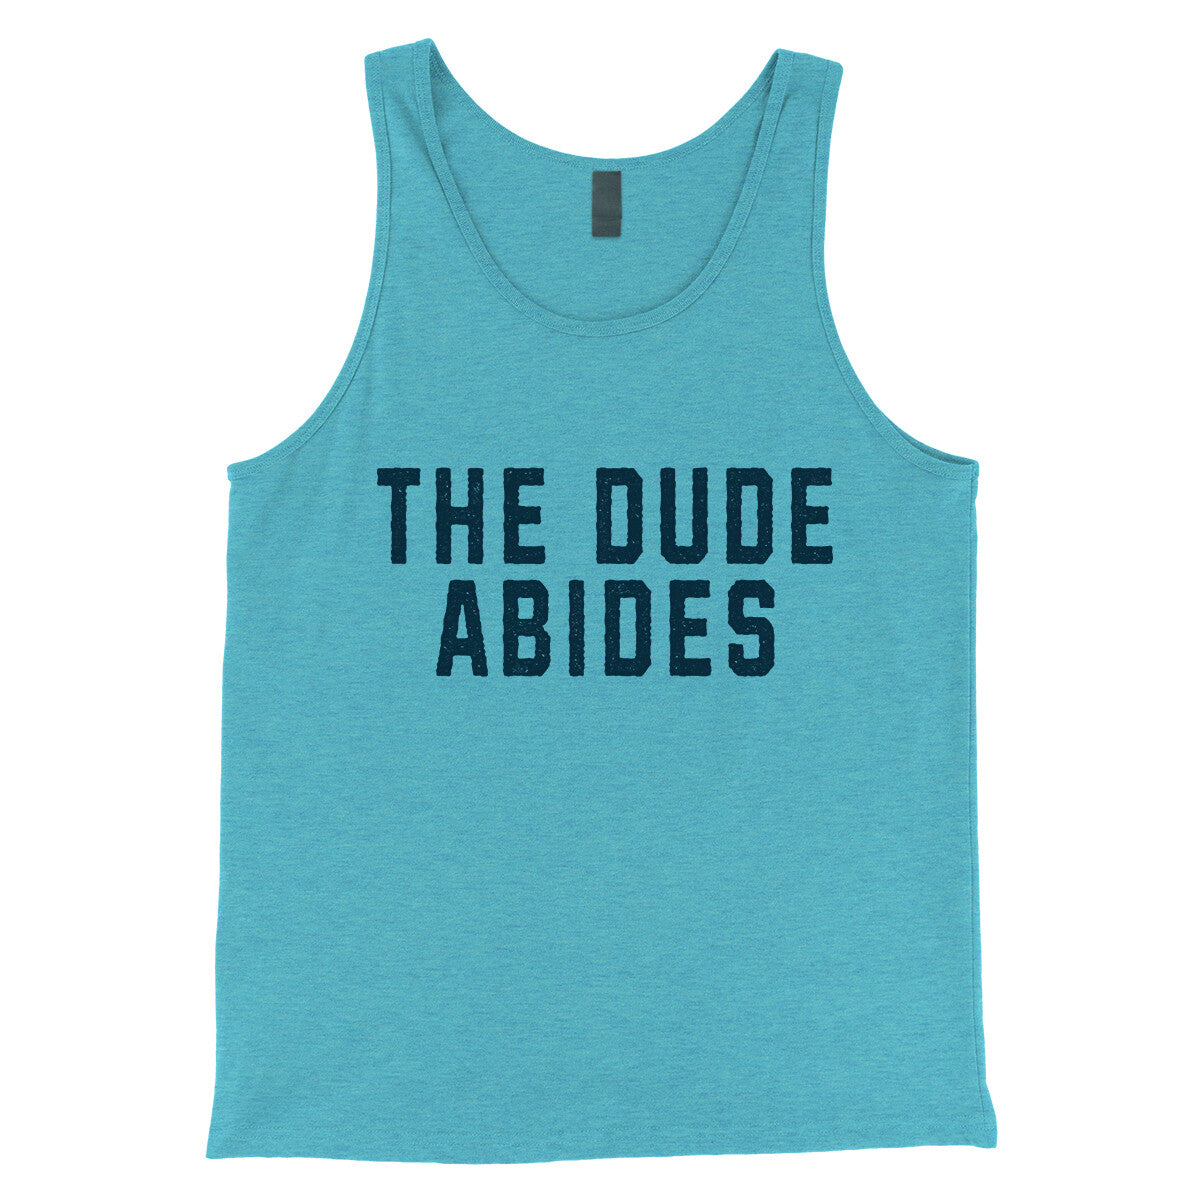 The Dude Abides in Aqua Triblend Color